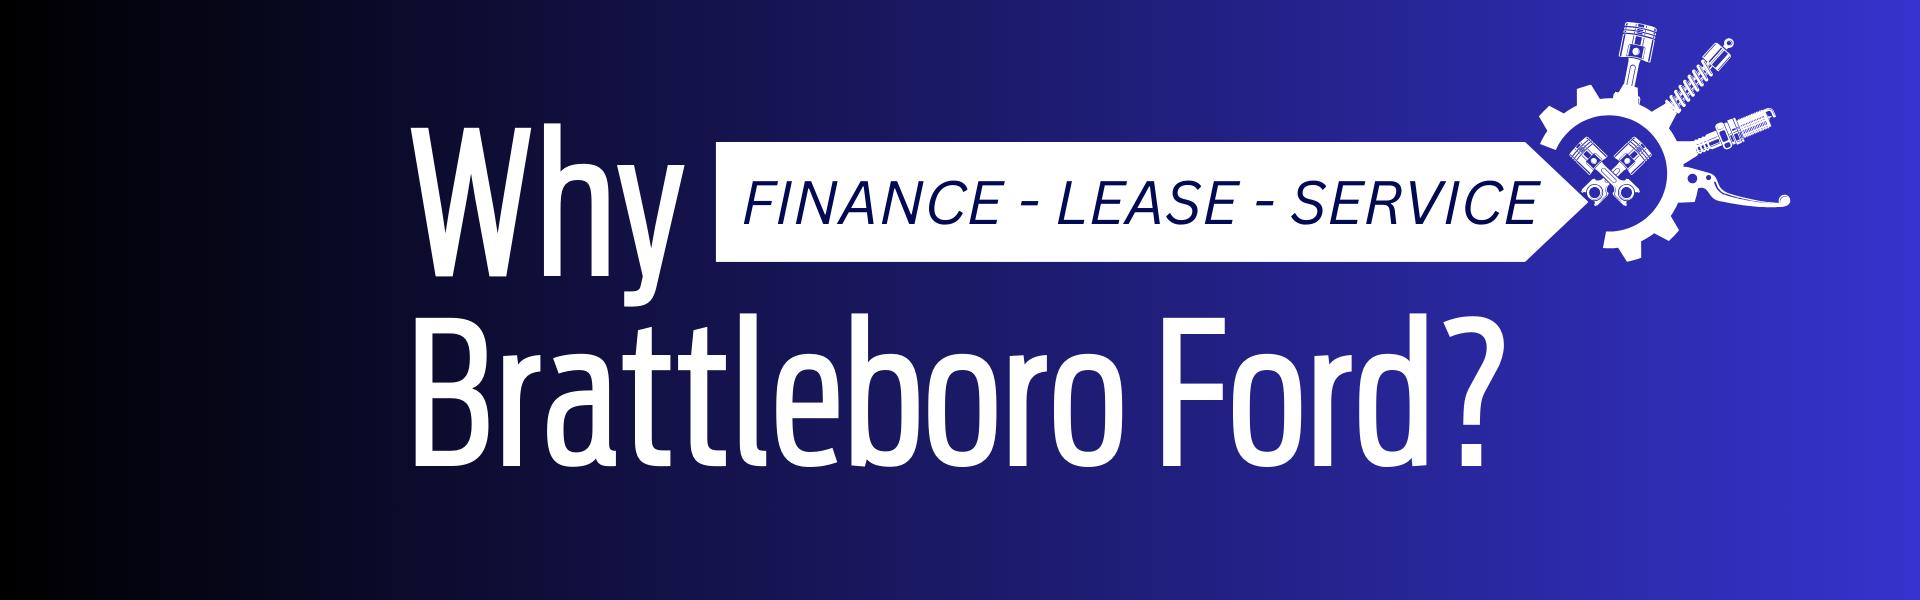 Why Brattleboro Ford - banner 